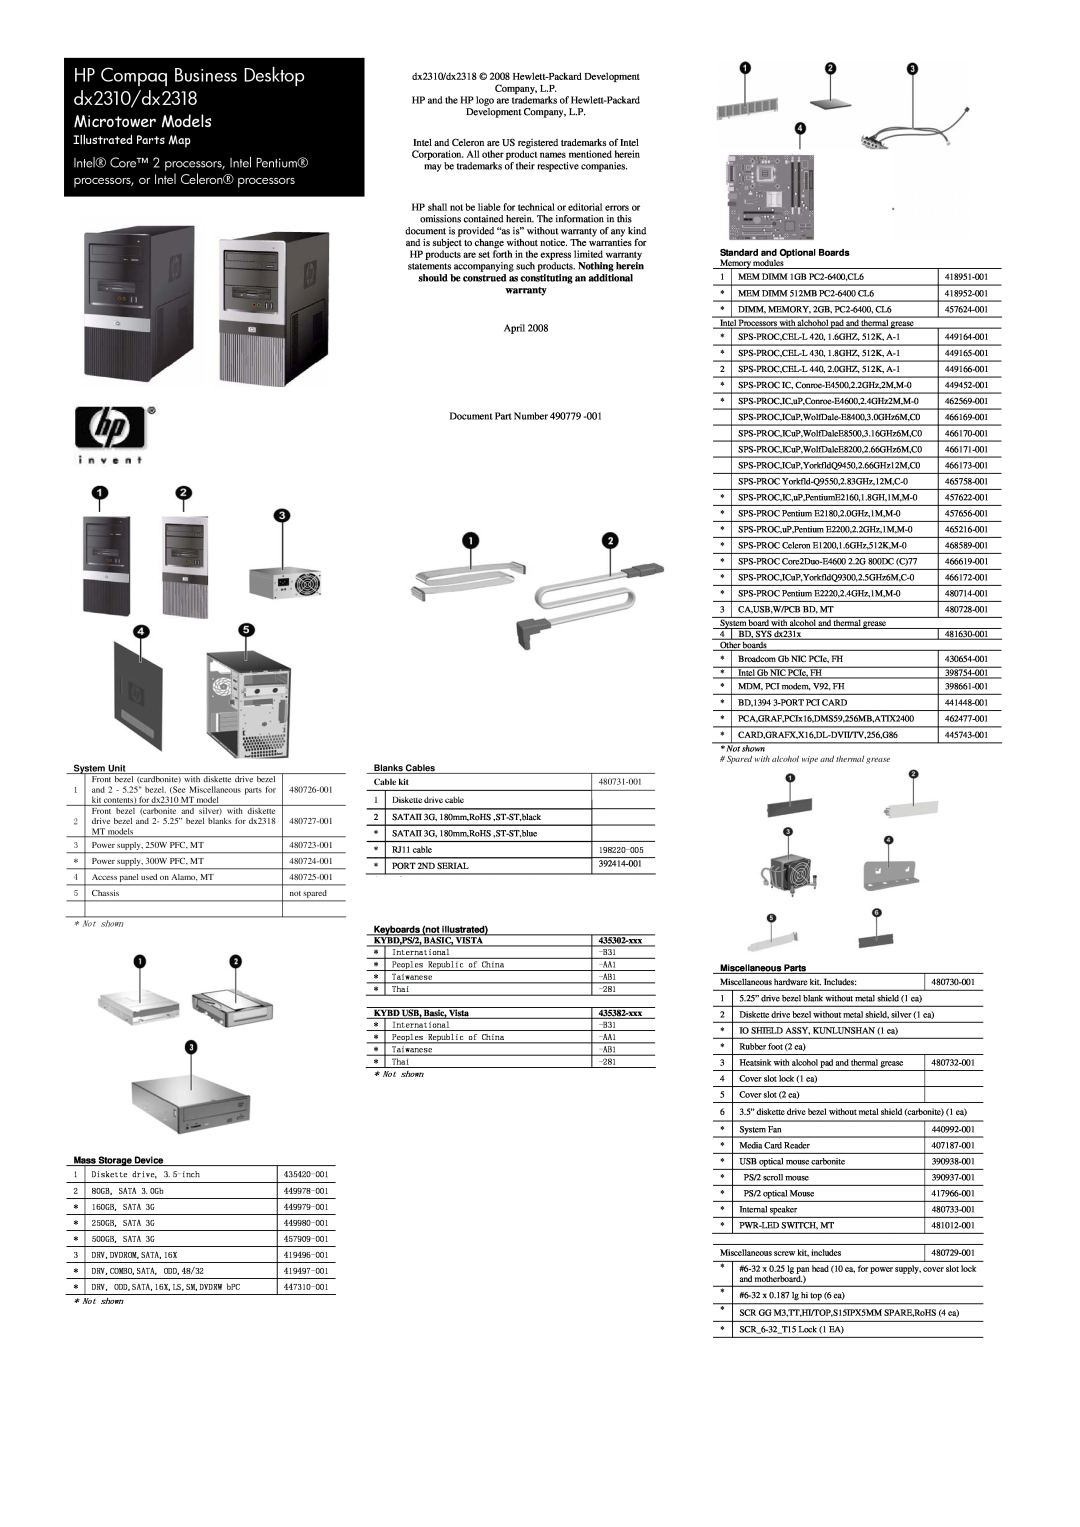 HP manual HP Compaq Business Desktop dx2310/dx2318, Microtower Models, Illustrated Parts Map, Development Company, L.P 